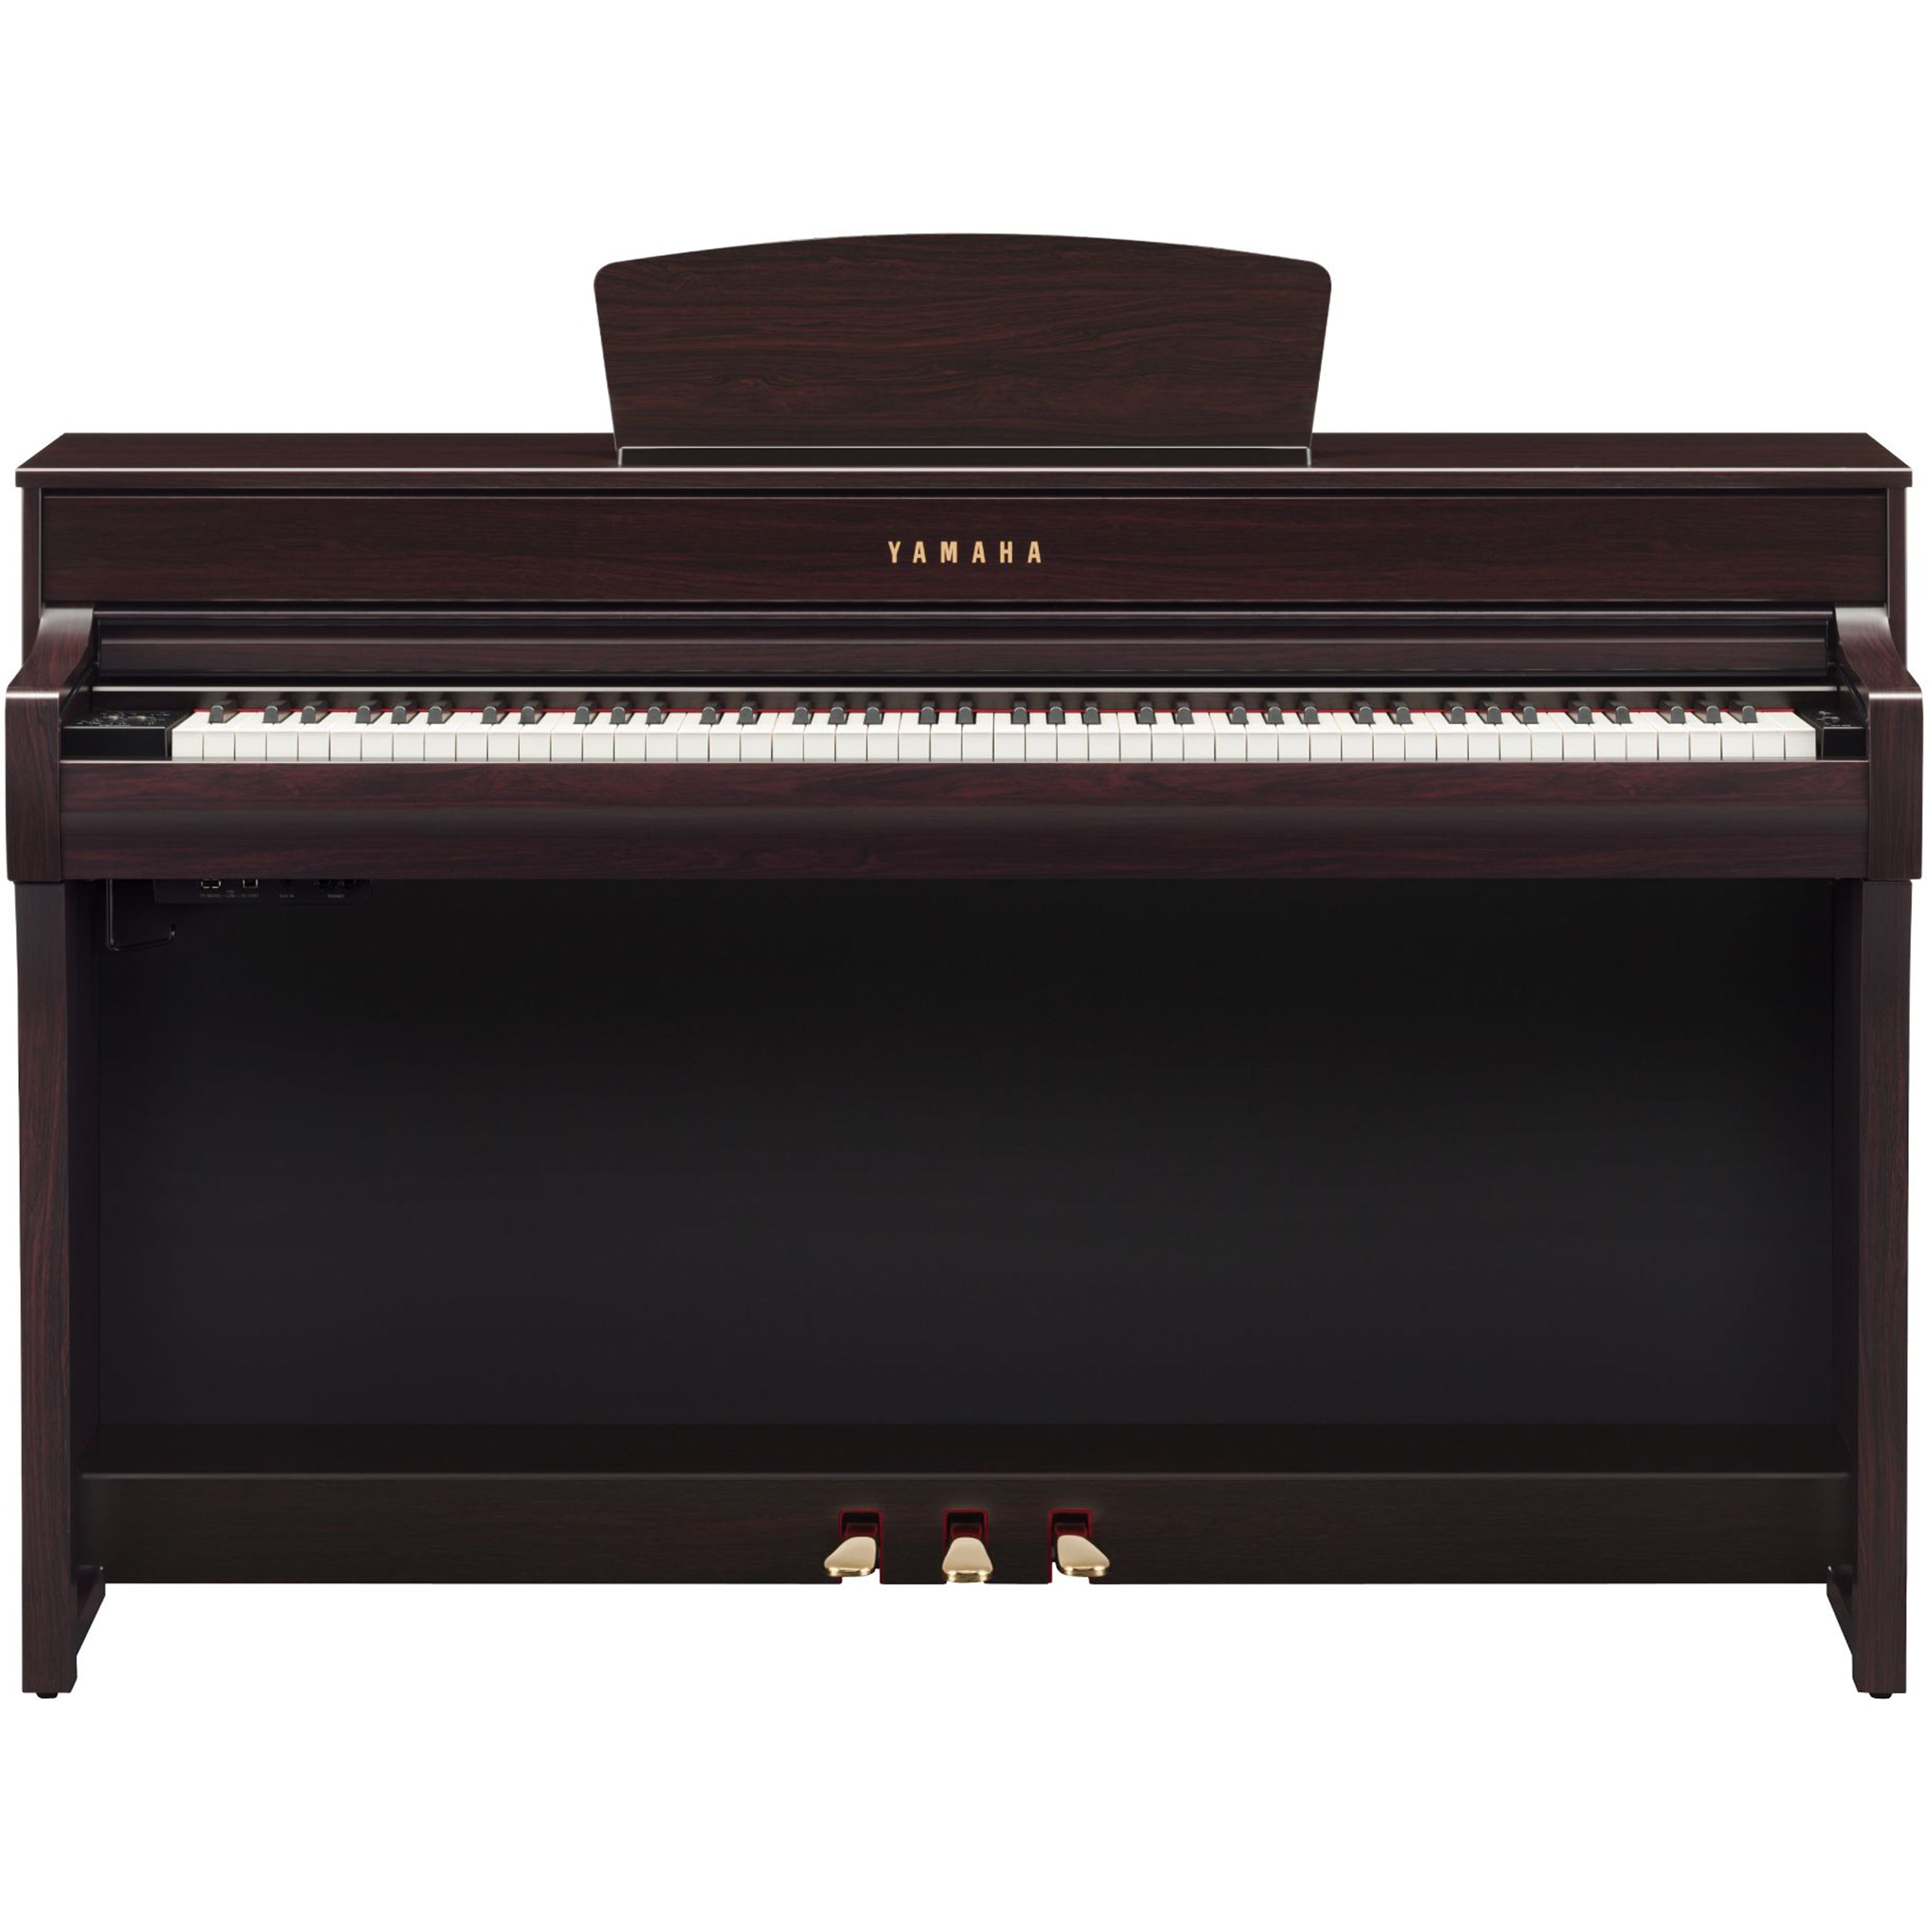 Yamaha Clavinova CLP-735 Digital Piano - Rosewood – Kraft Music